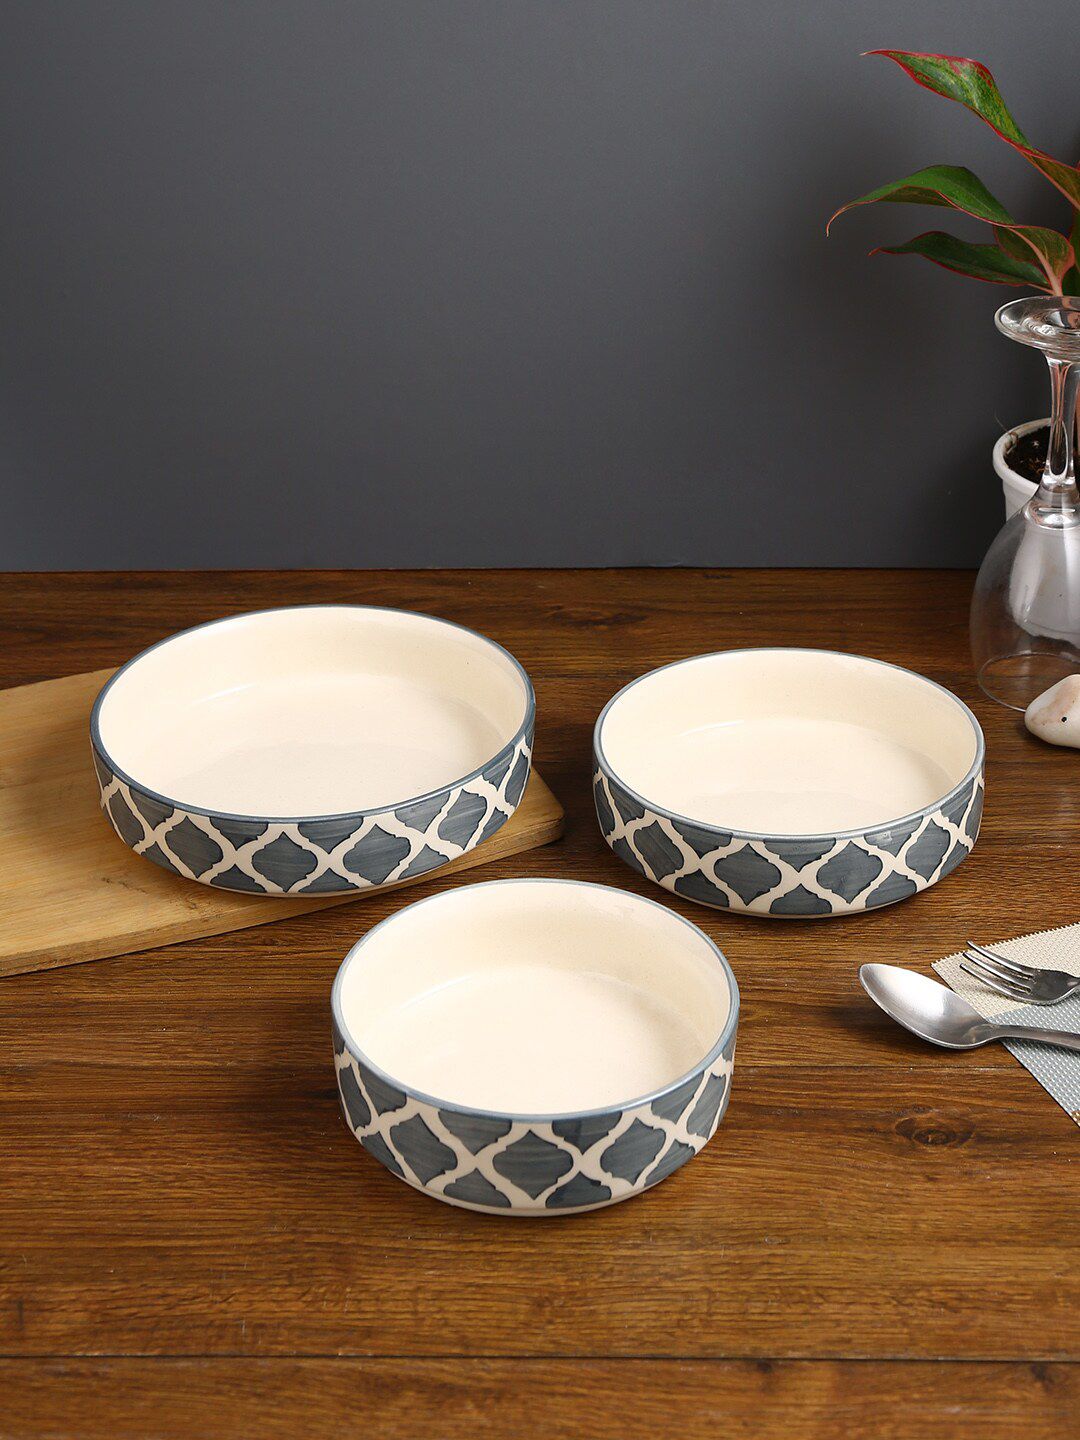 Aapno Rajasthan Set Of 3 Grey & White Printed Ceramic Bowls Price in India